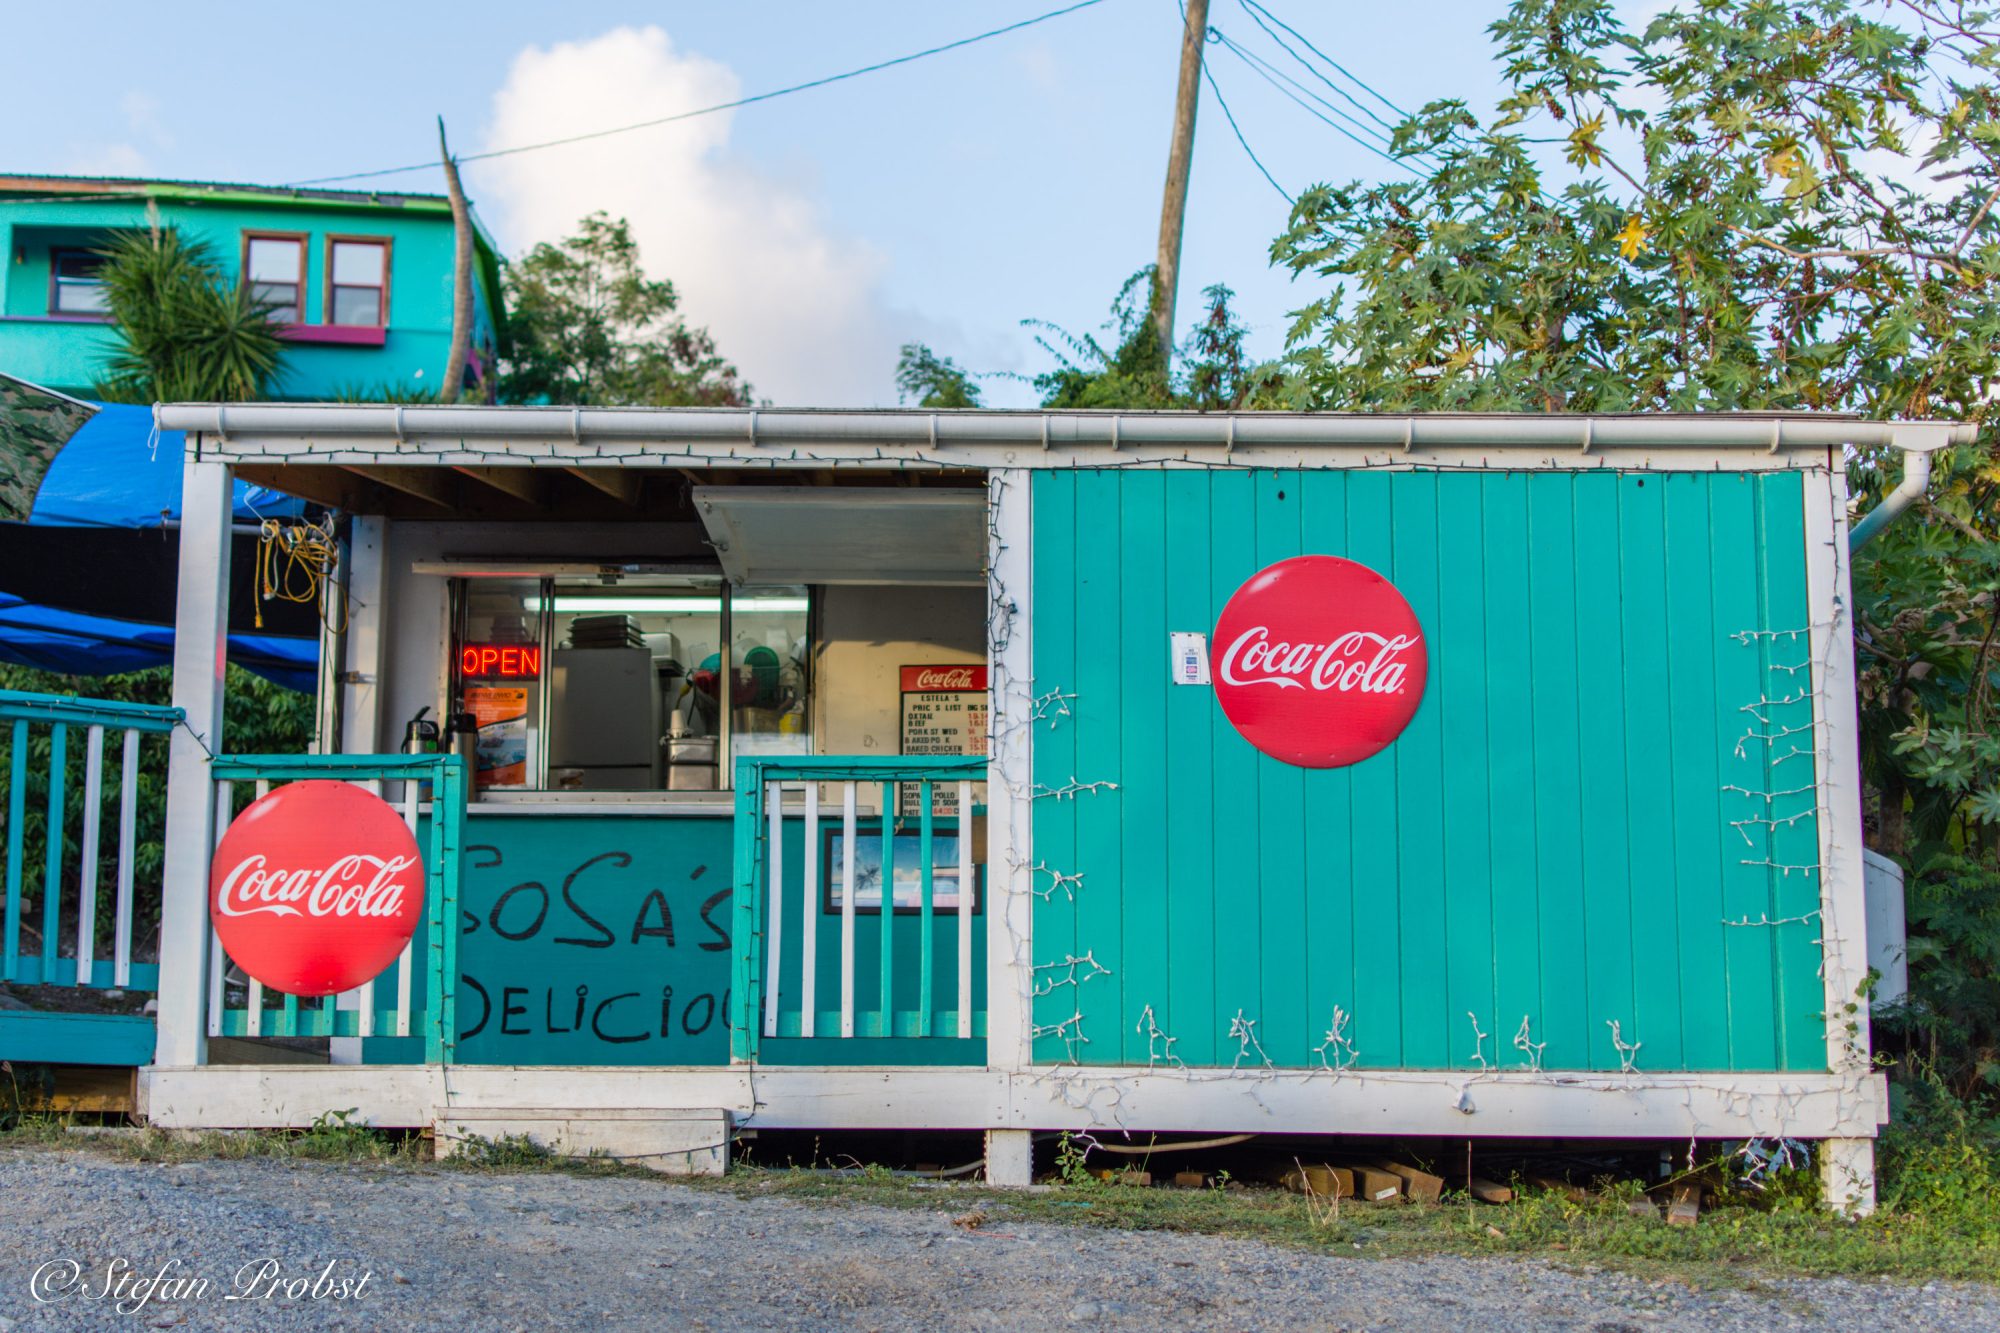 U.S. Virgin Islands - St. John - Coke is everywhere